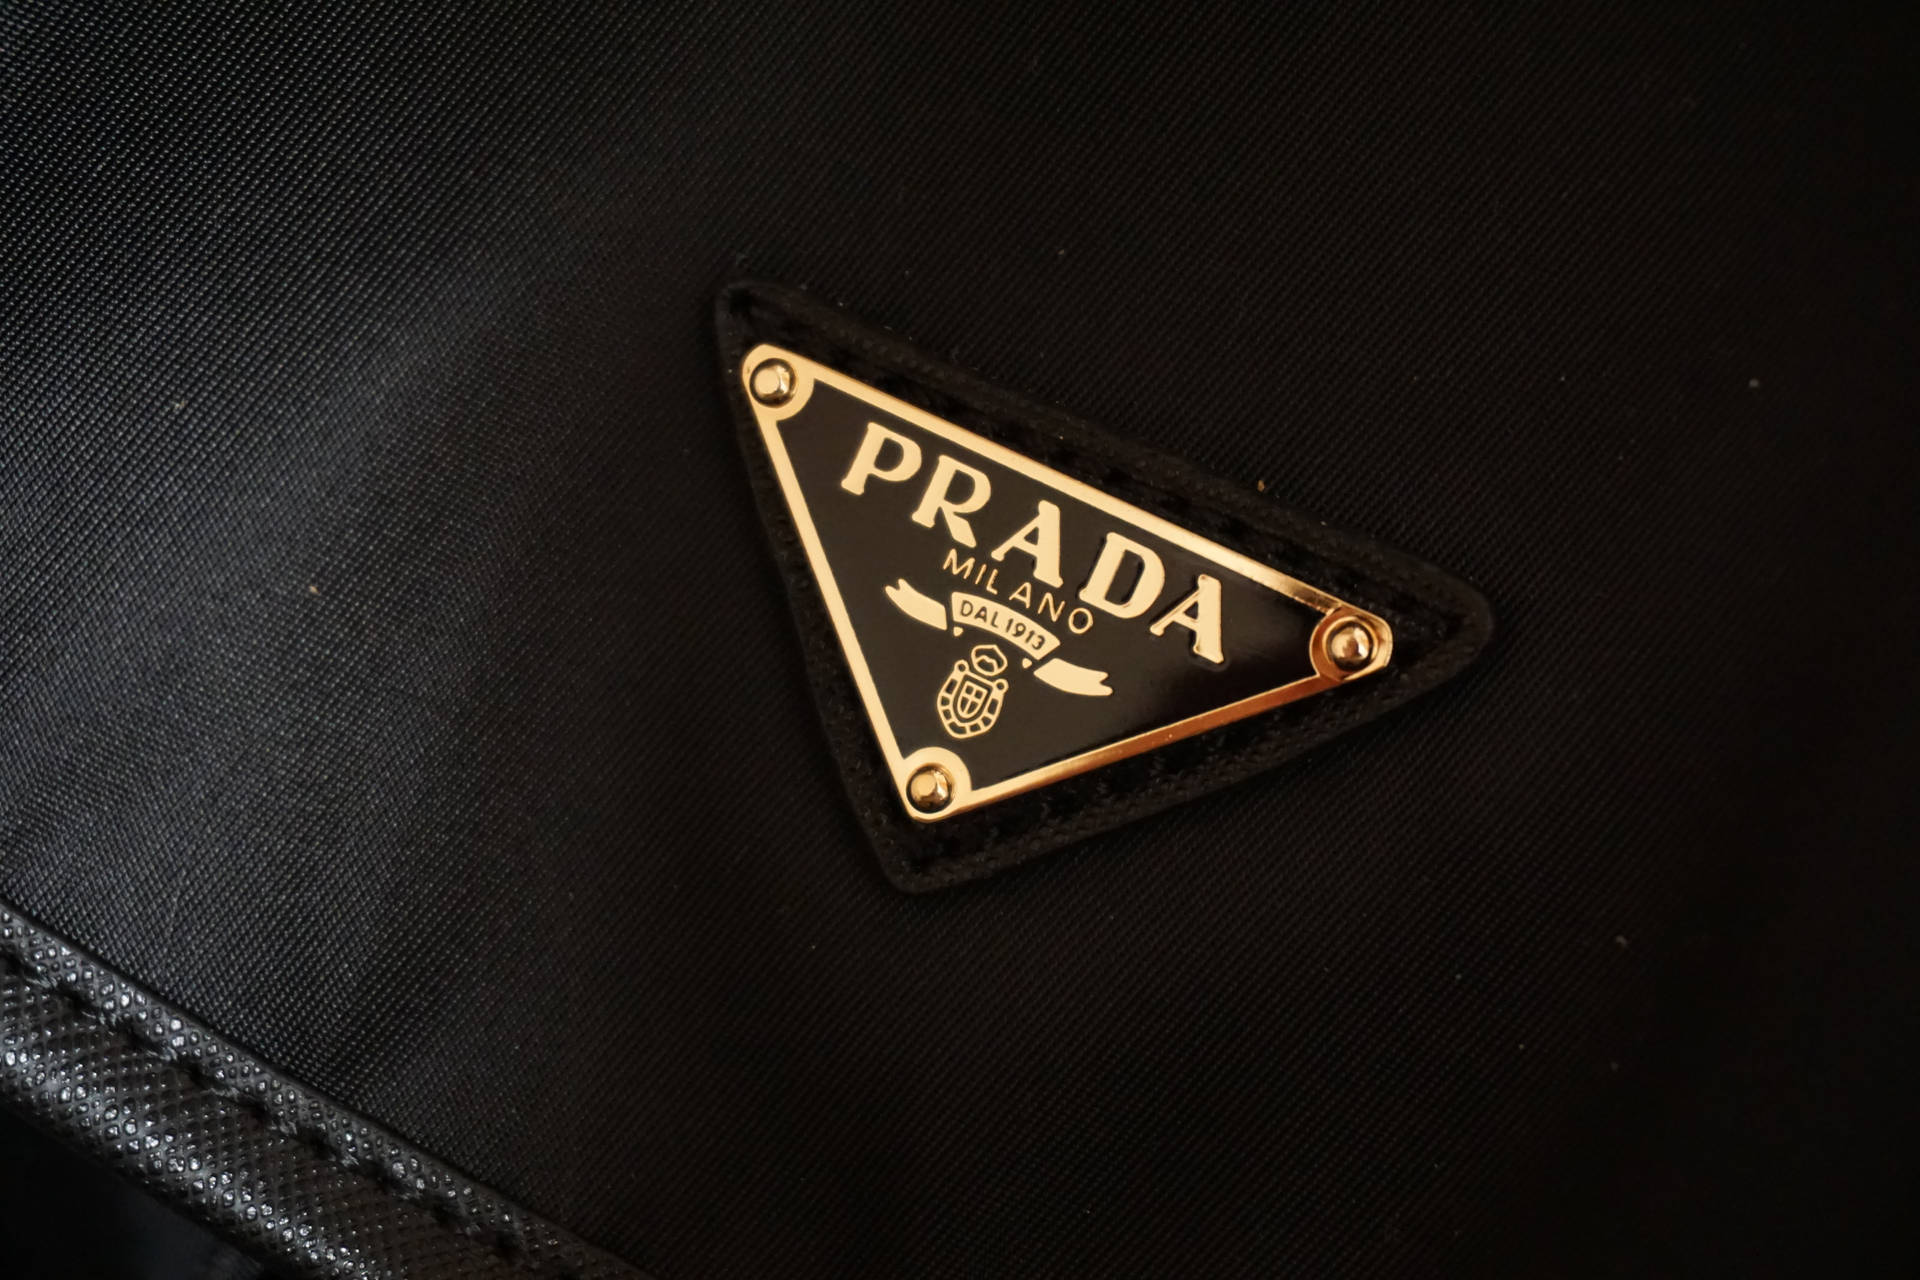 Prada Gold Badge Background